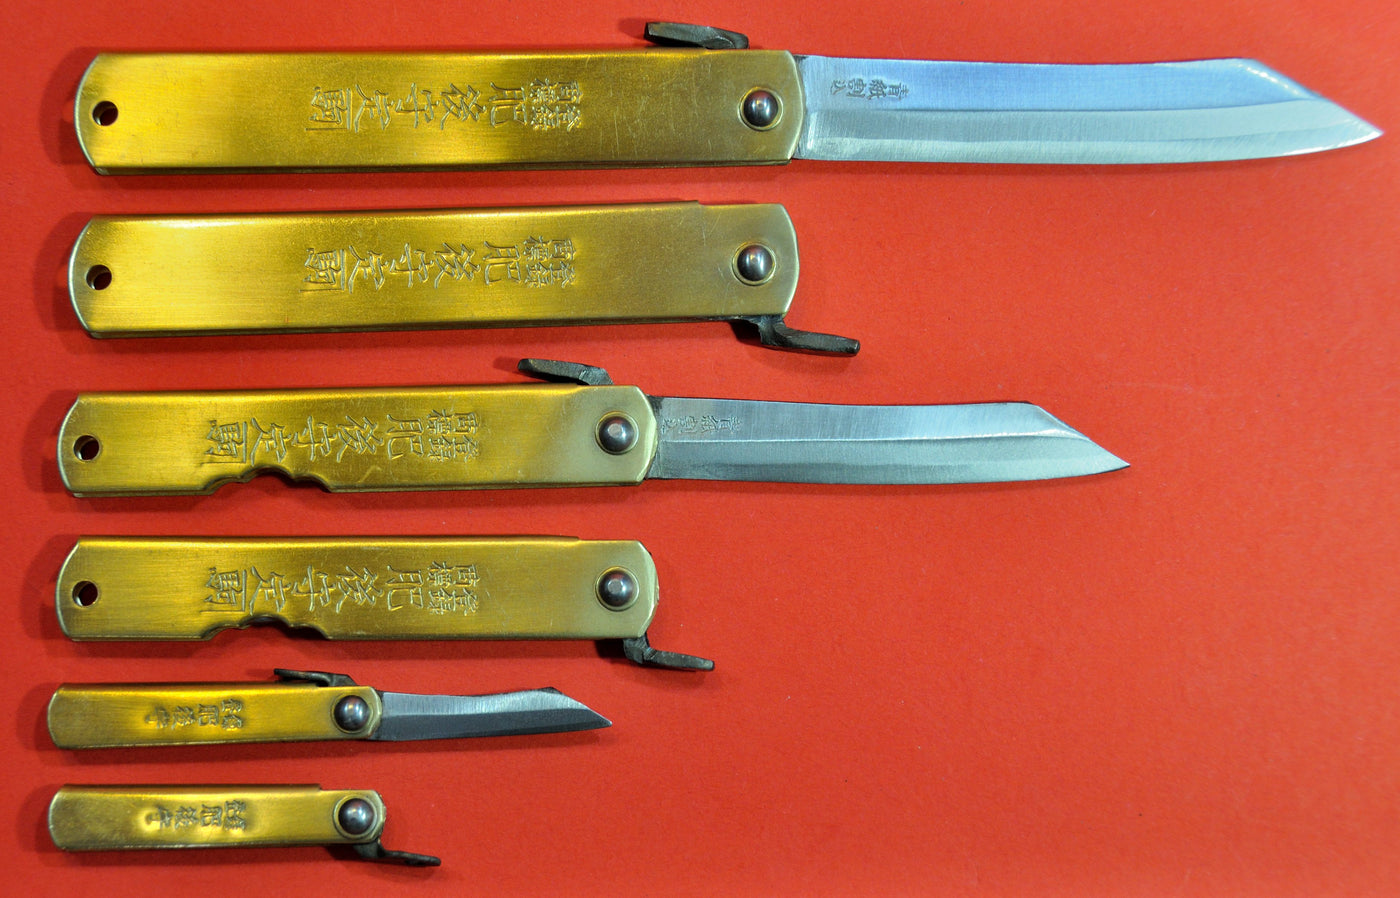 Japanese NAGAO HIGONOKAMI folding pocket knife bluesteel brass Japan -  Osaka Tools